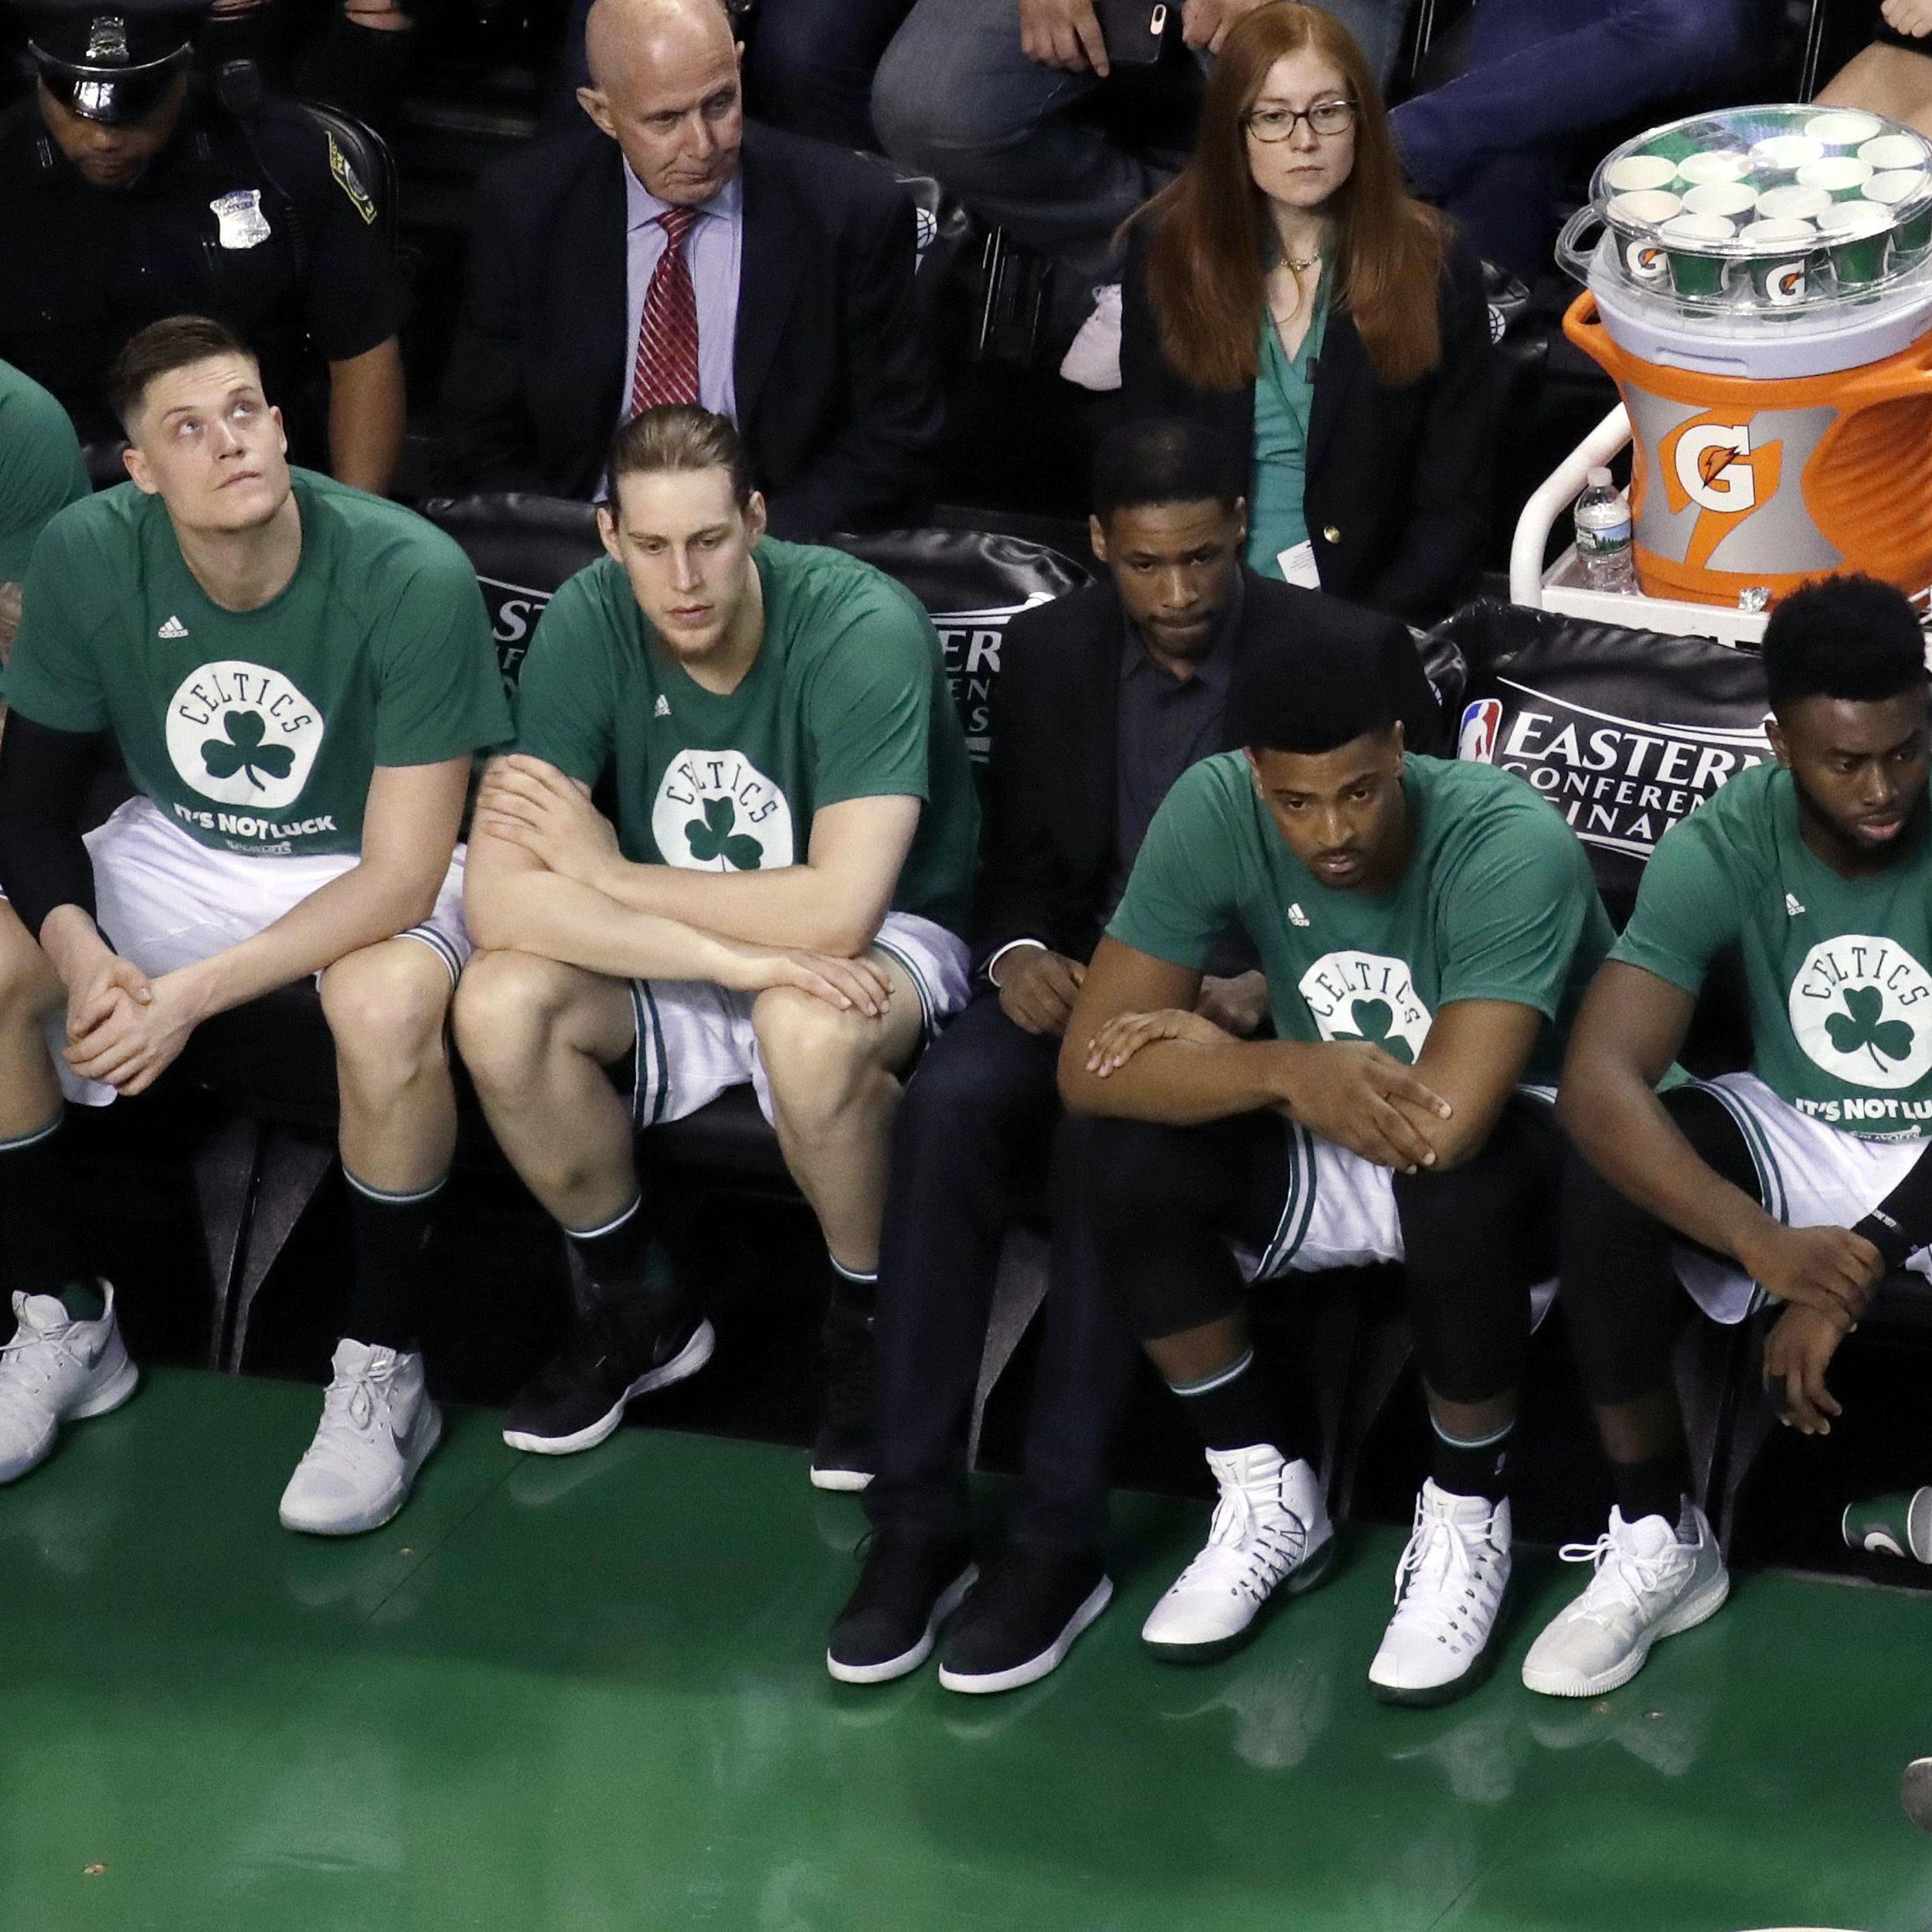 Cleveland Cavaliers win comeback thriller against Boston Celtics